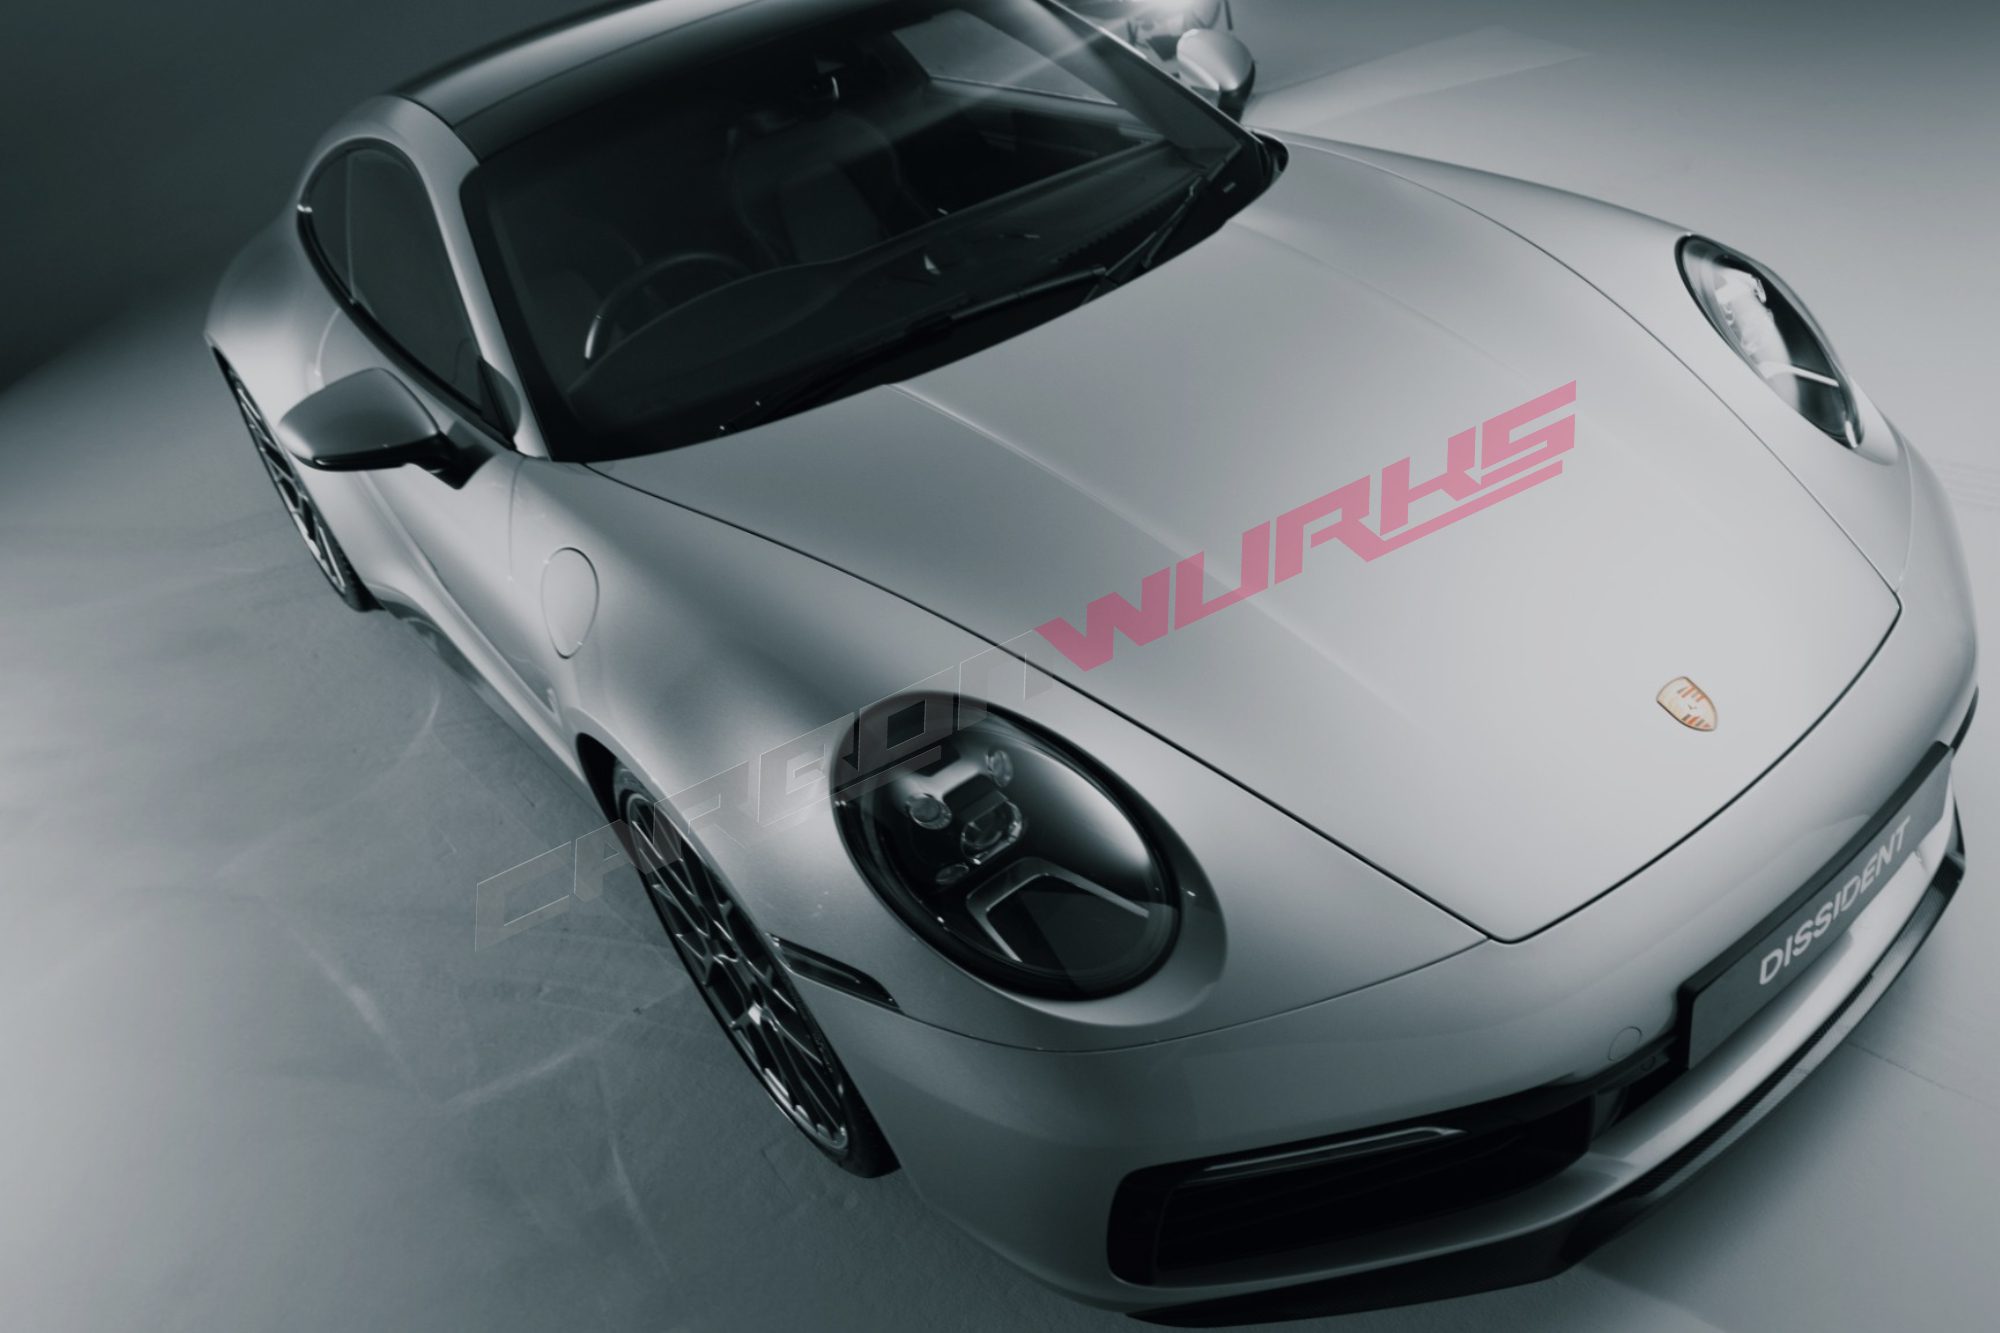 Dissident_Porsche_Carrera_911_922_Launch_Edition_Carbon_Fibre_Side_Skirts4